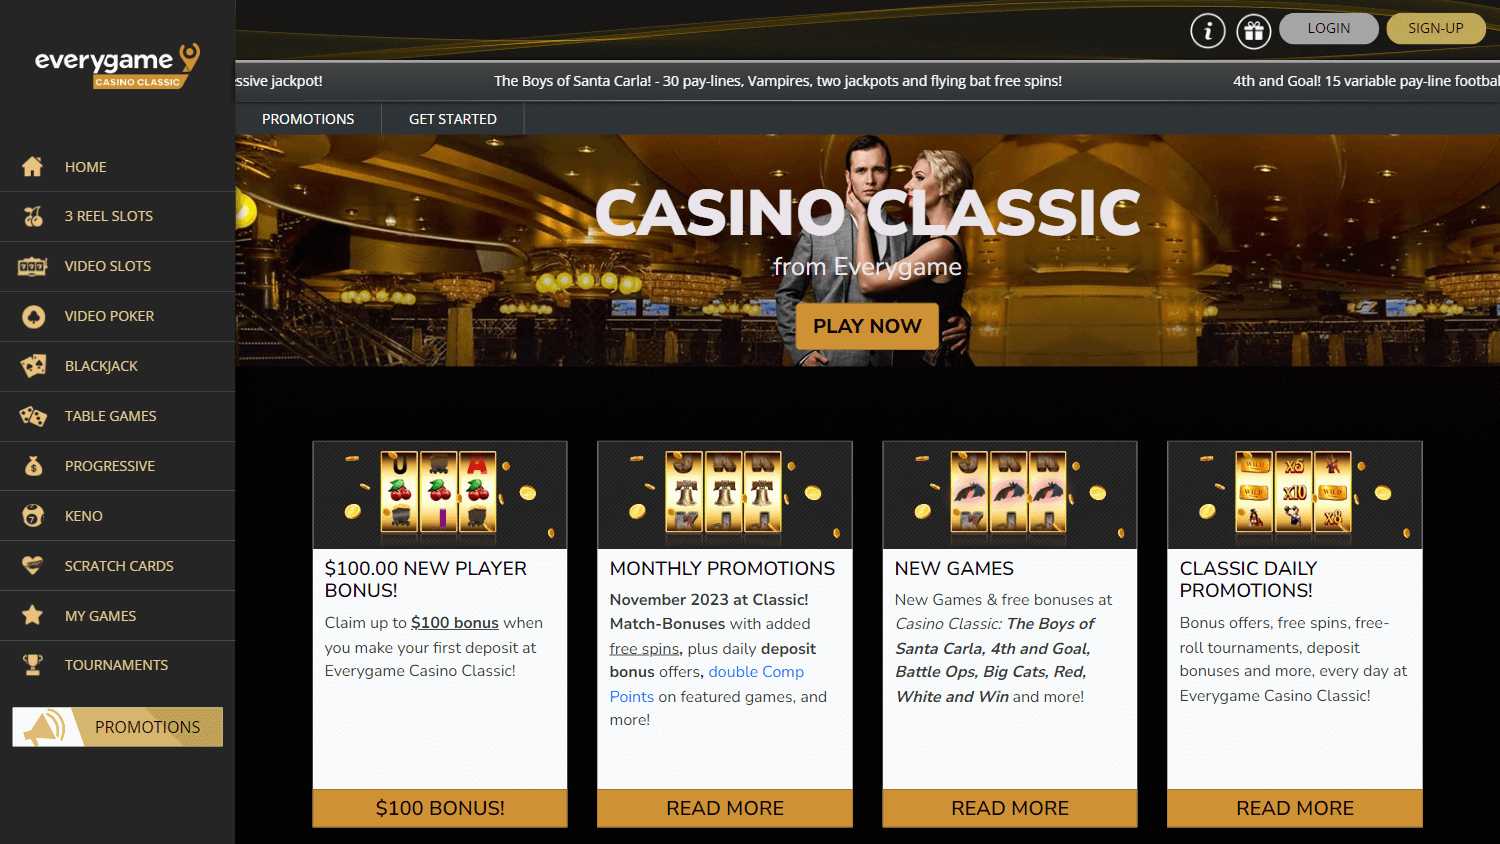 everygame_casino_classic_promotions_desktop